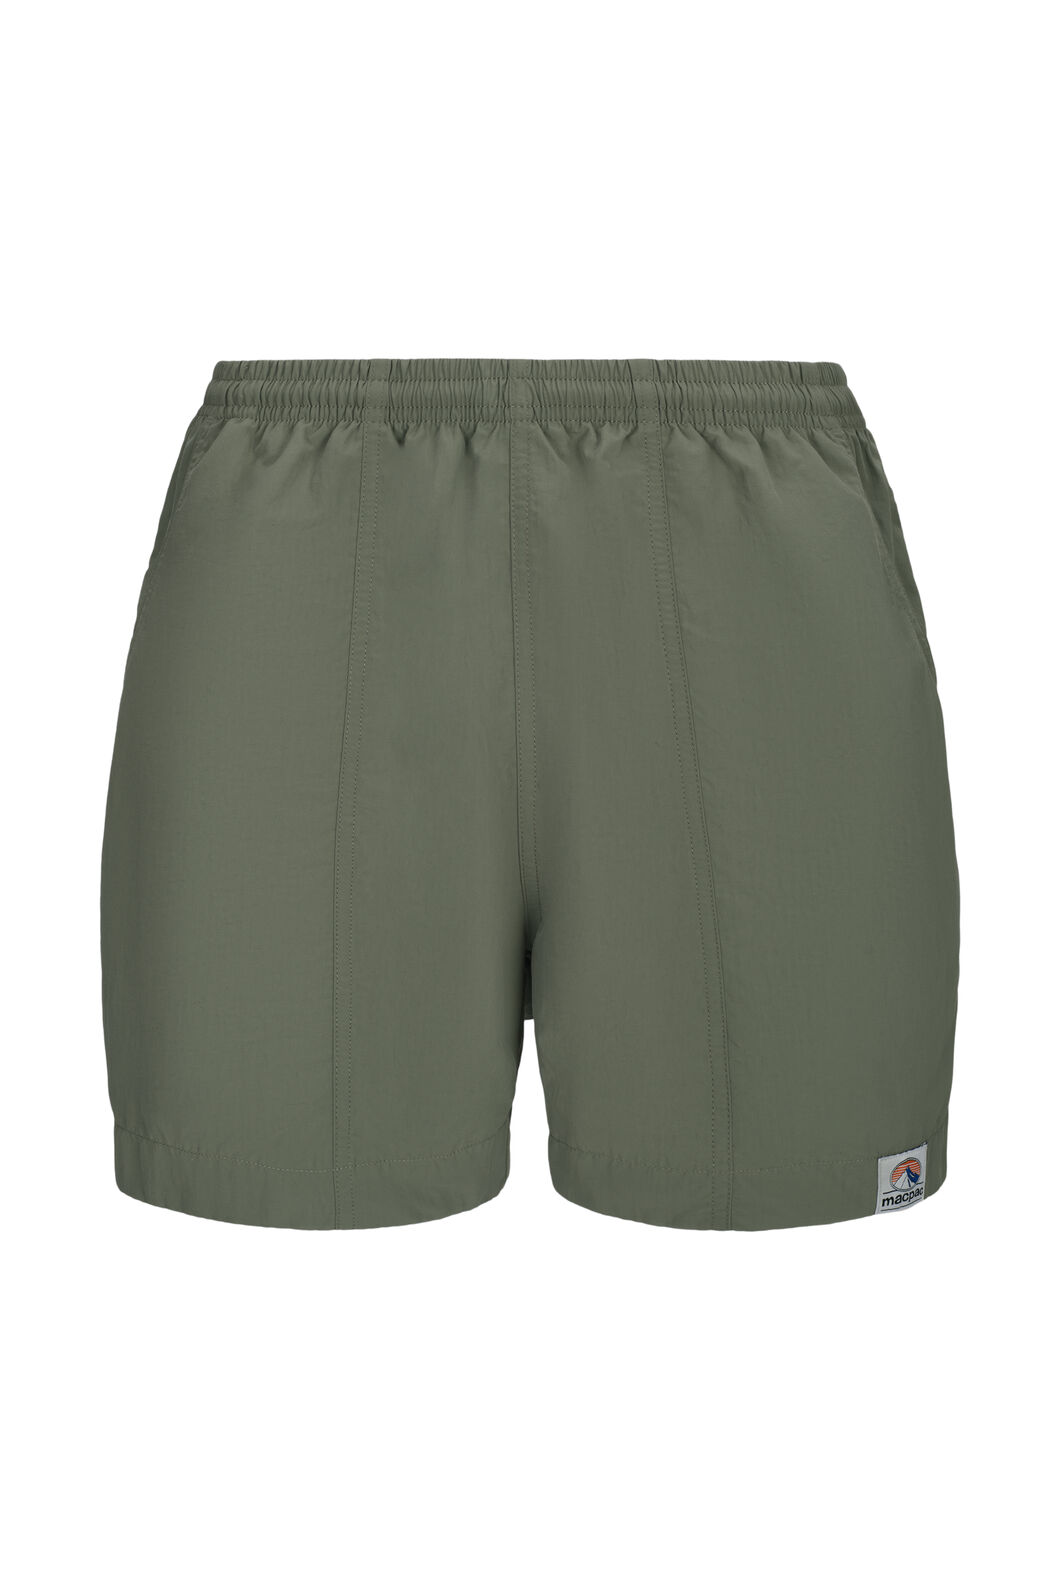 Macpac Winger Shorts — Men's | Macpac